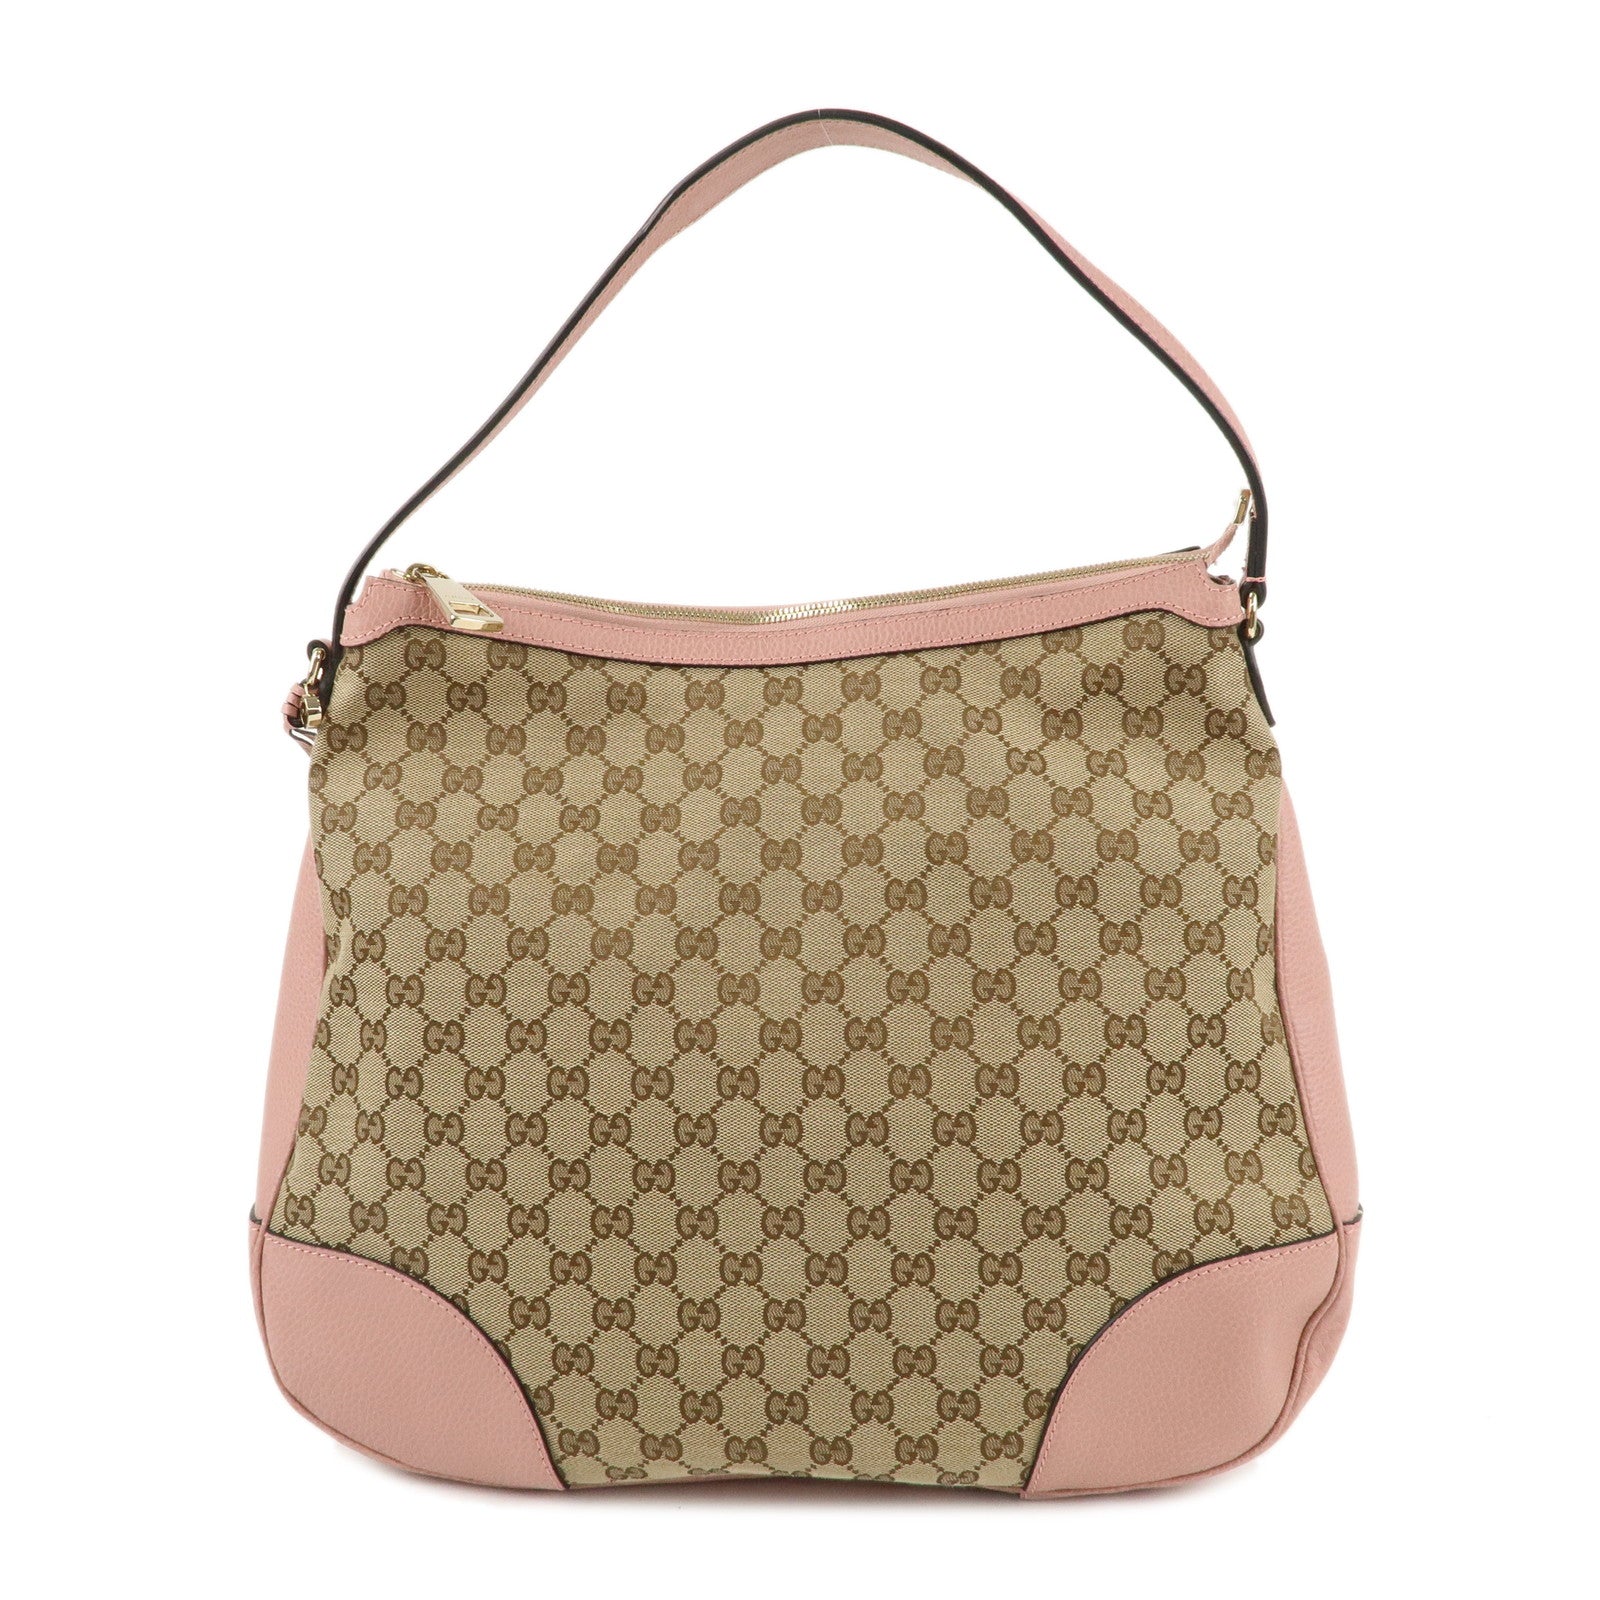 GUCCI-GG-Canvas-Leather-One-Shoulder-Bag-Pink-Beige-449244